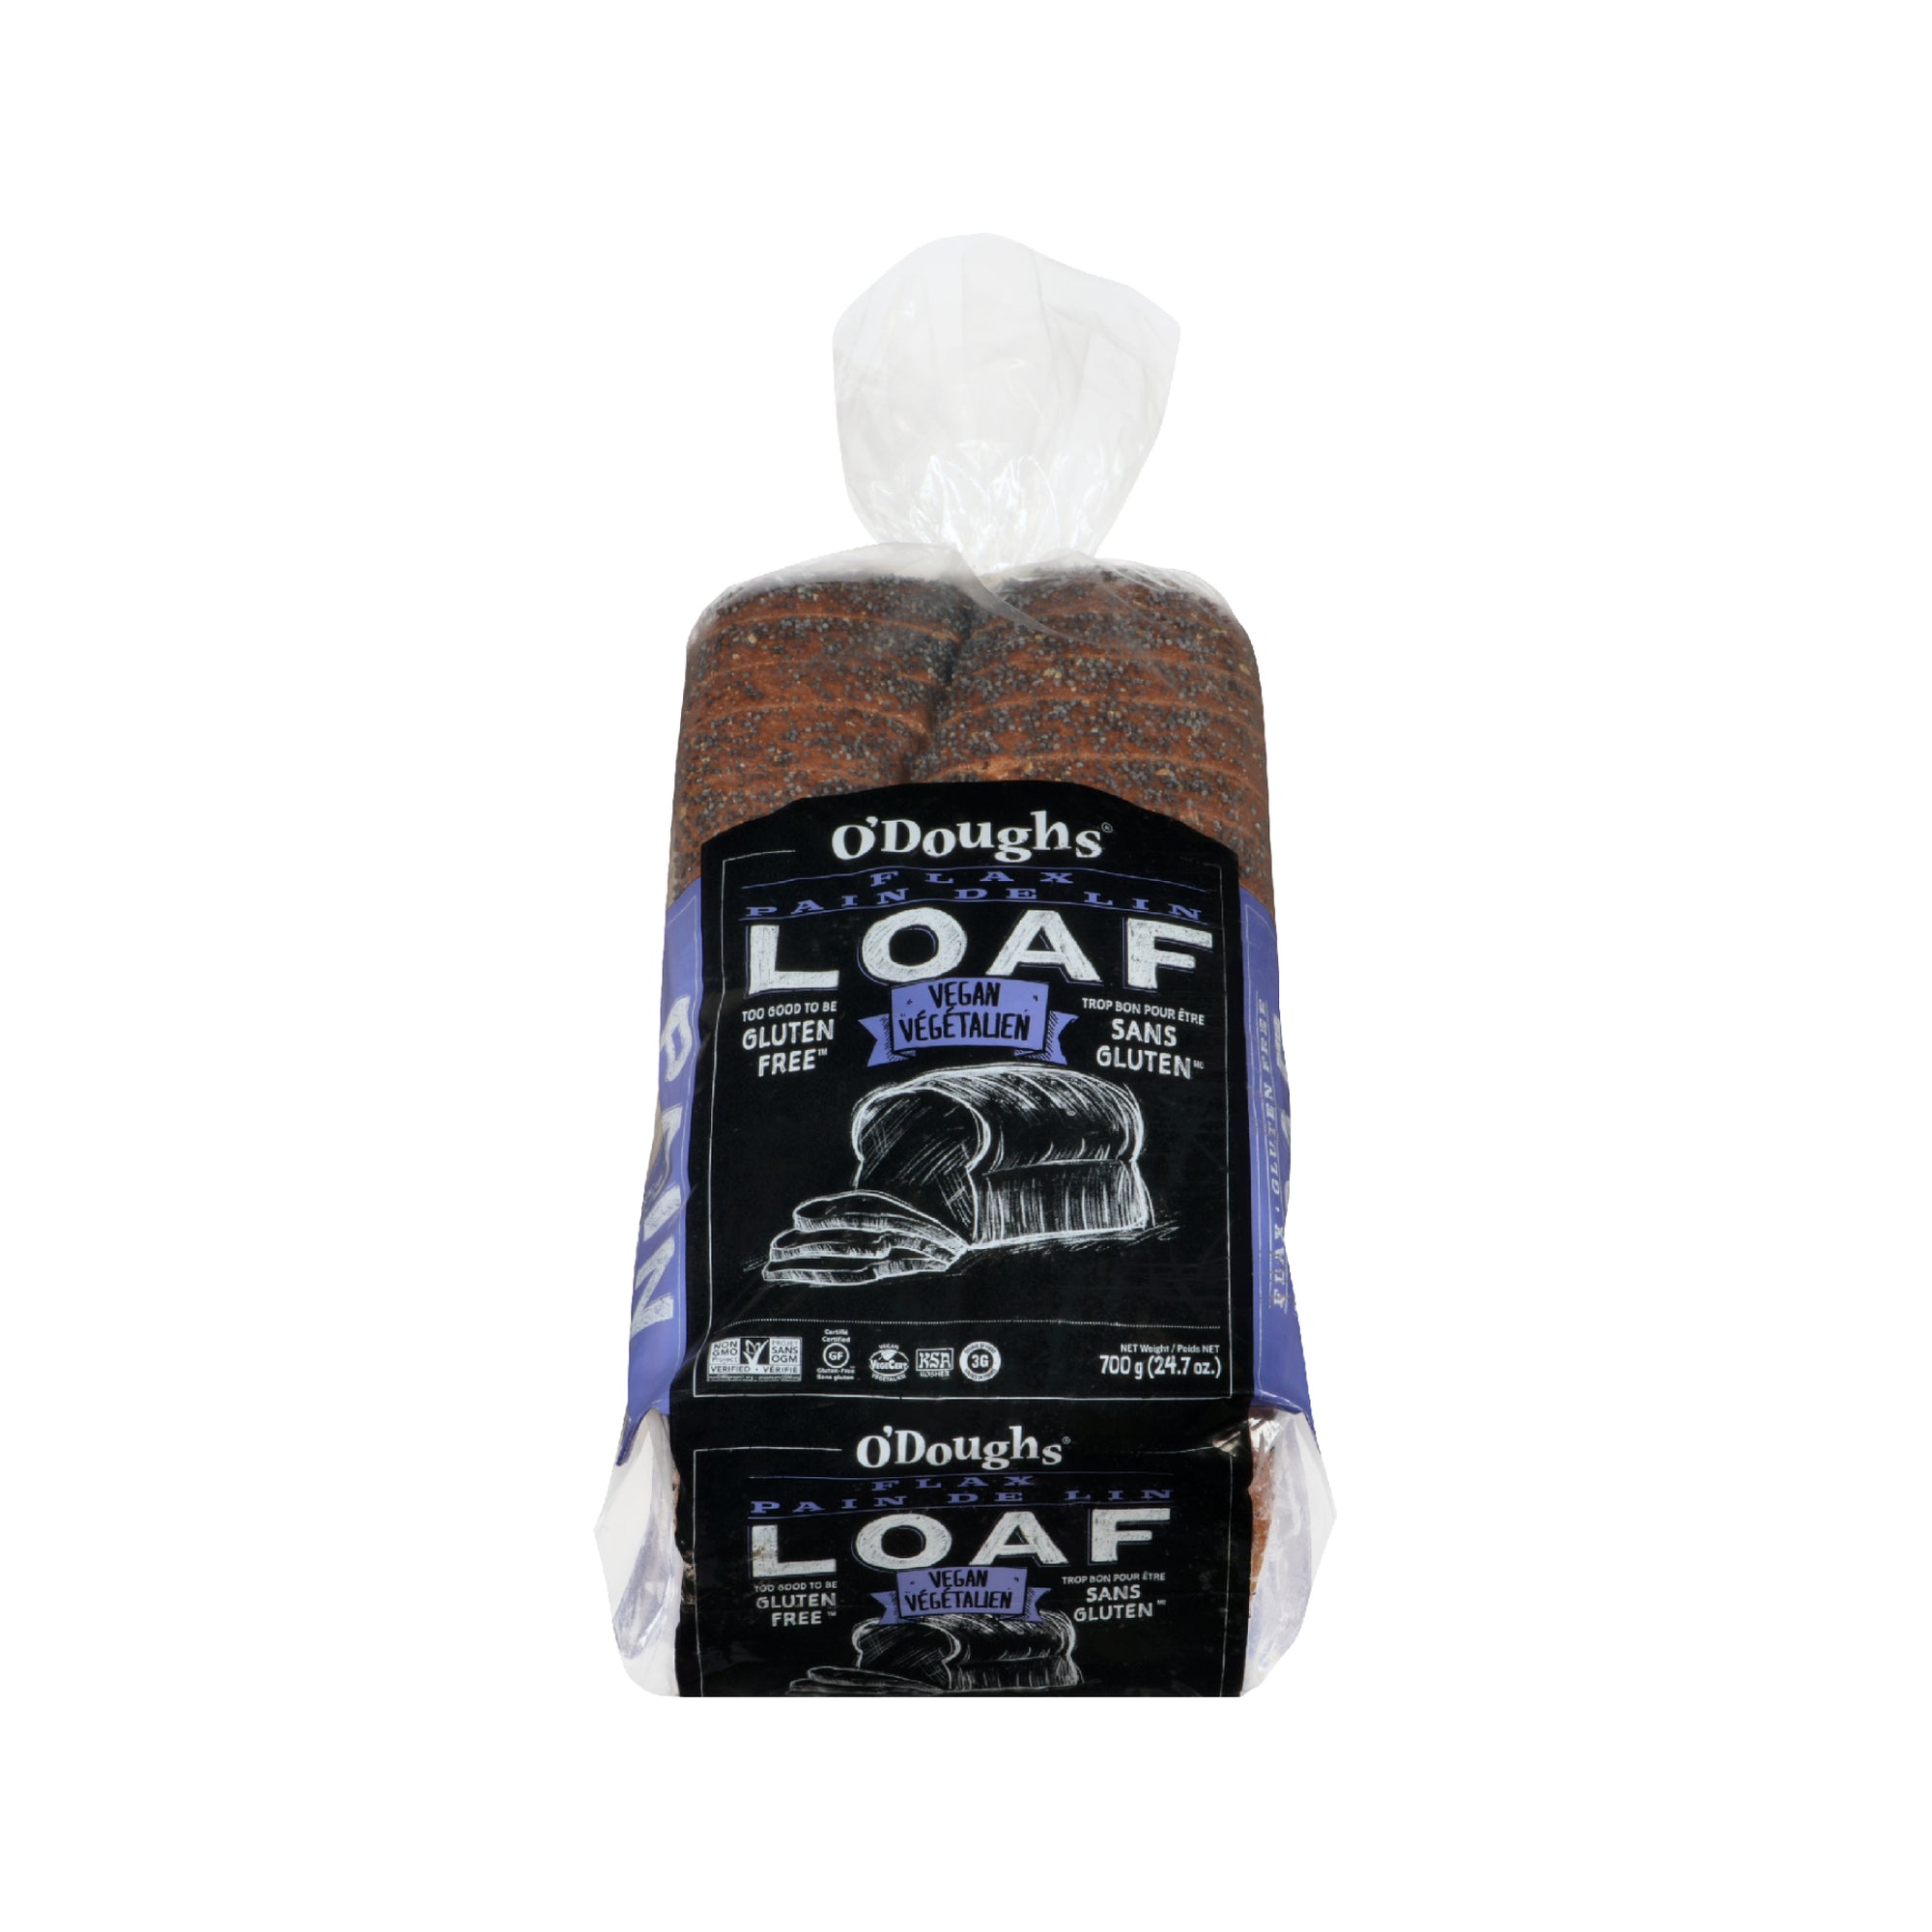 O'Dough's Vegan Flax Loaf 700g